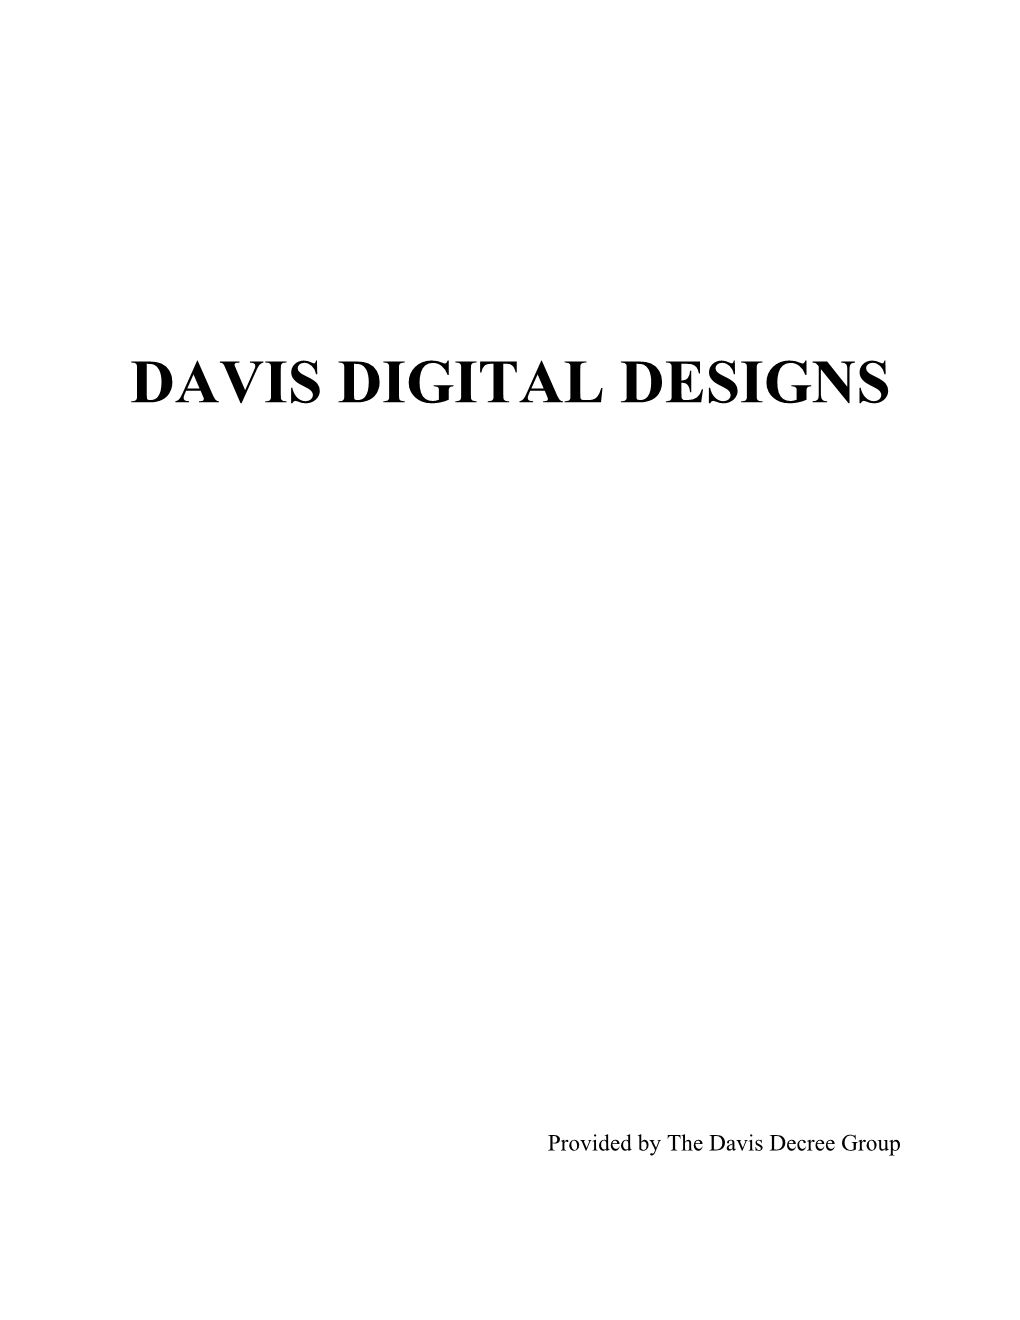 Davis Digital Designs